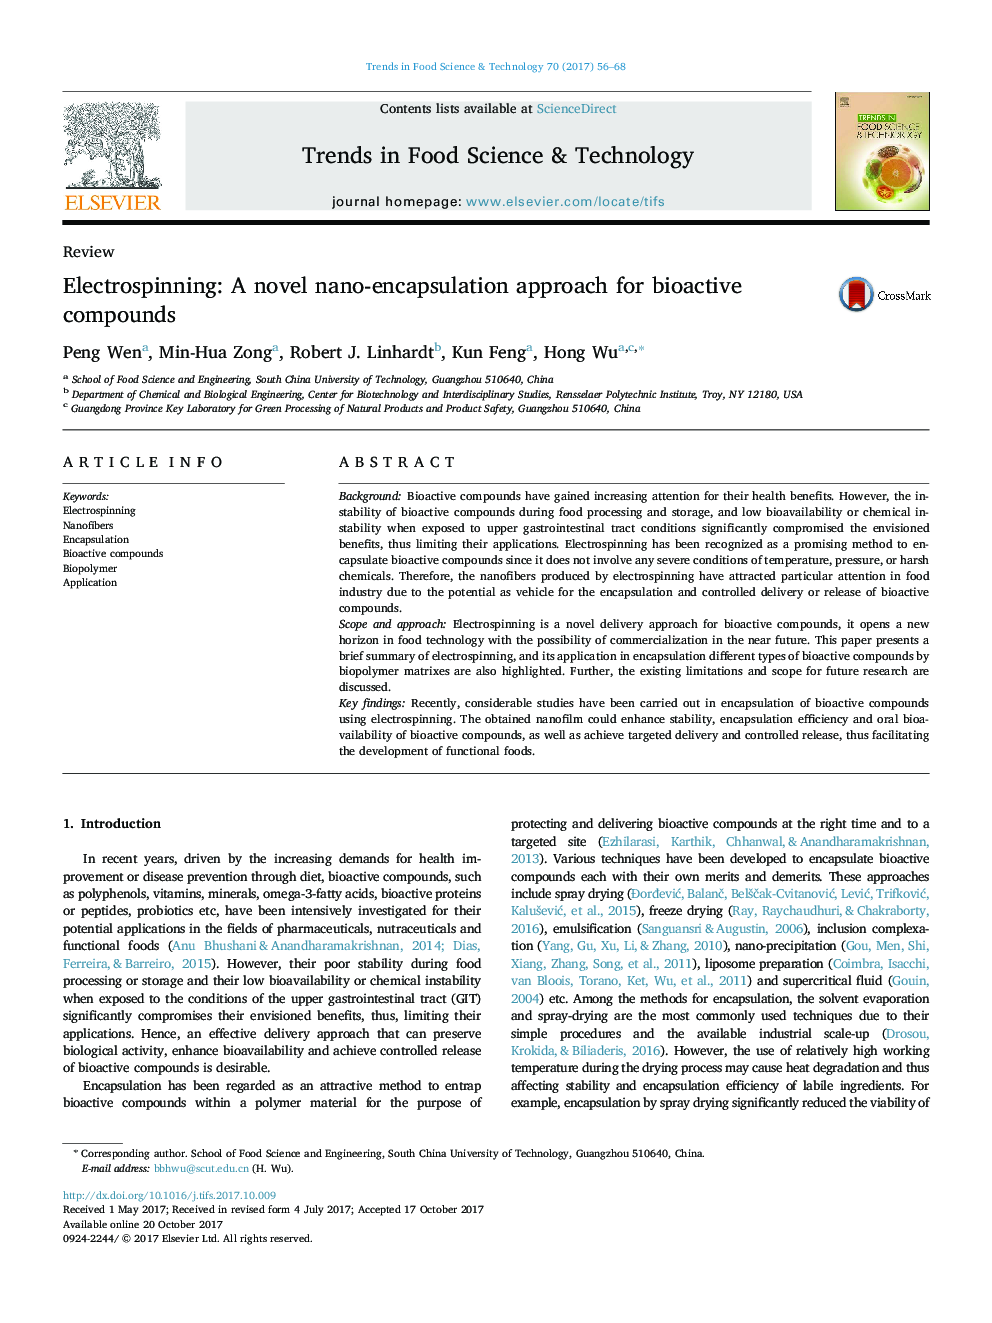 Electrospinning: A novel nano-encapsulation approach for bioactive compounds